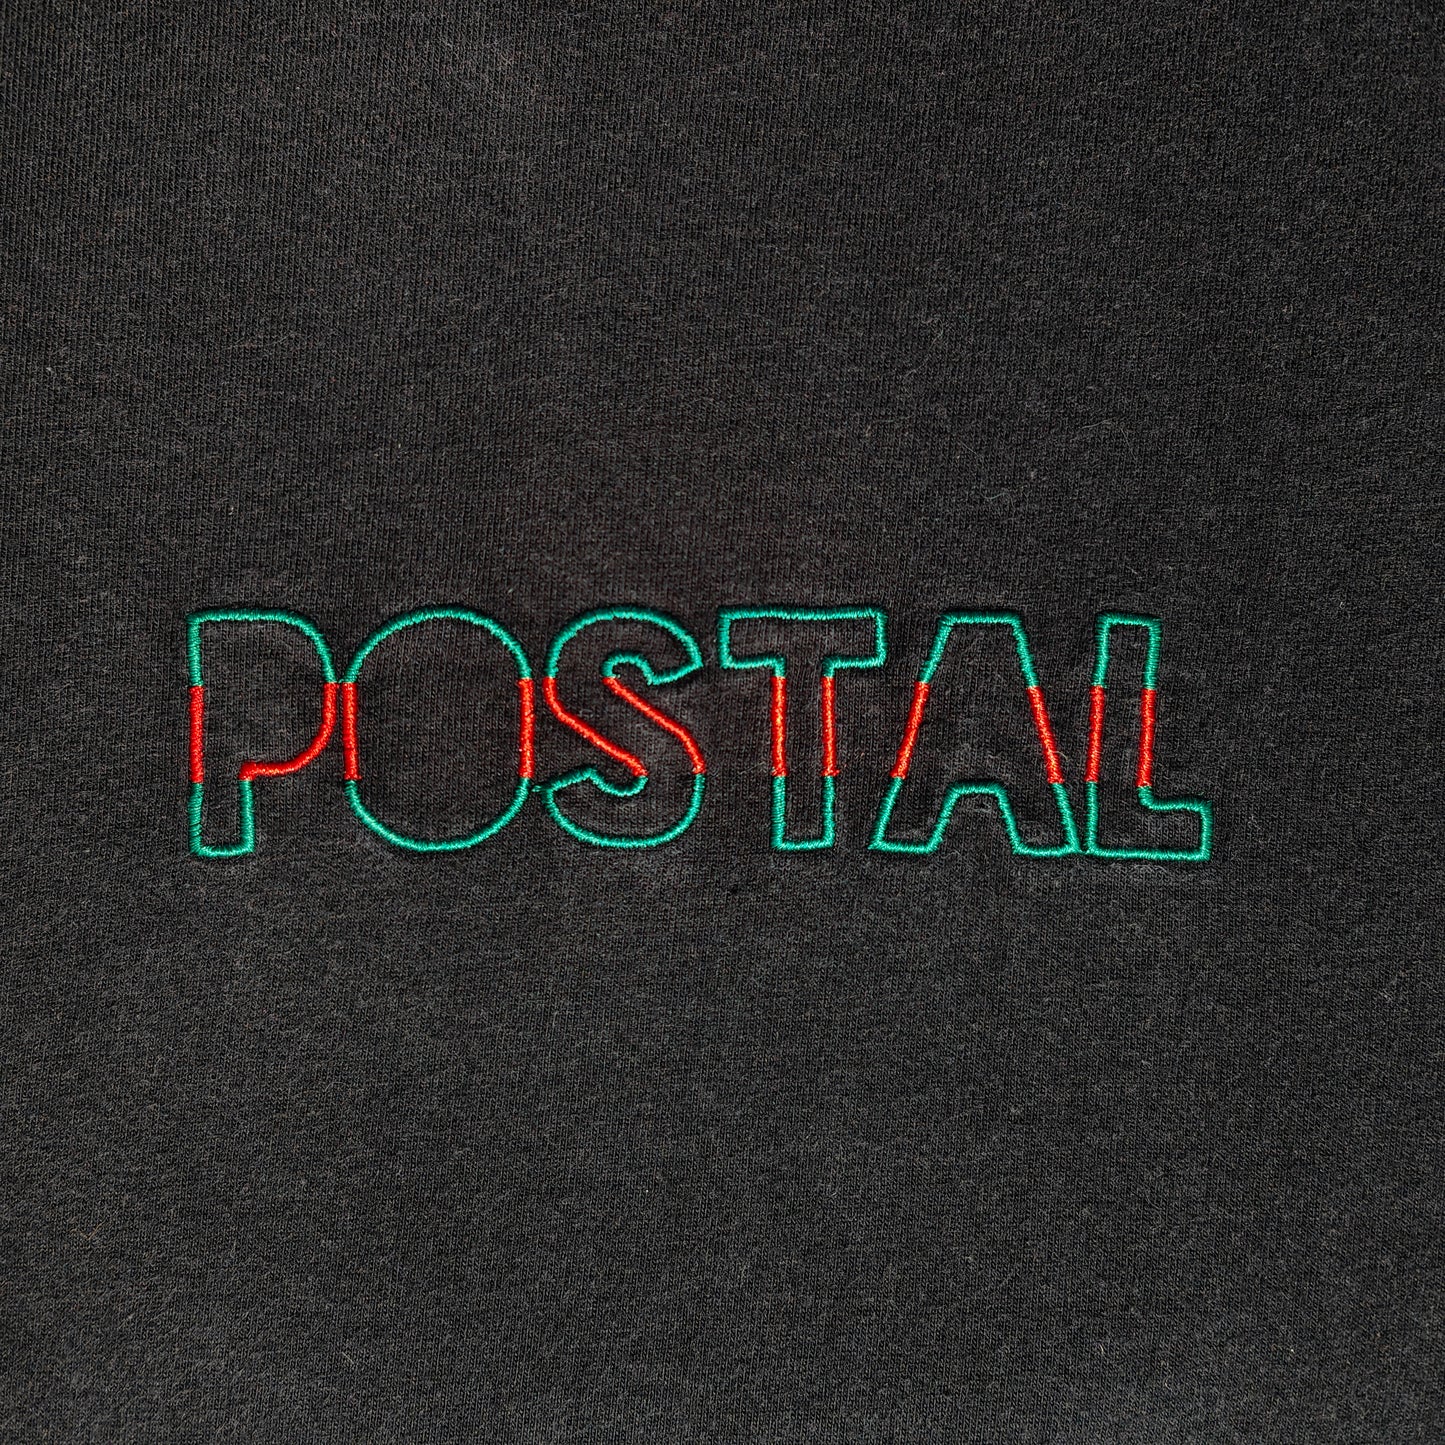 Postal Embroidered T Shirt - MEDIUM